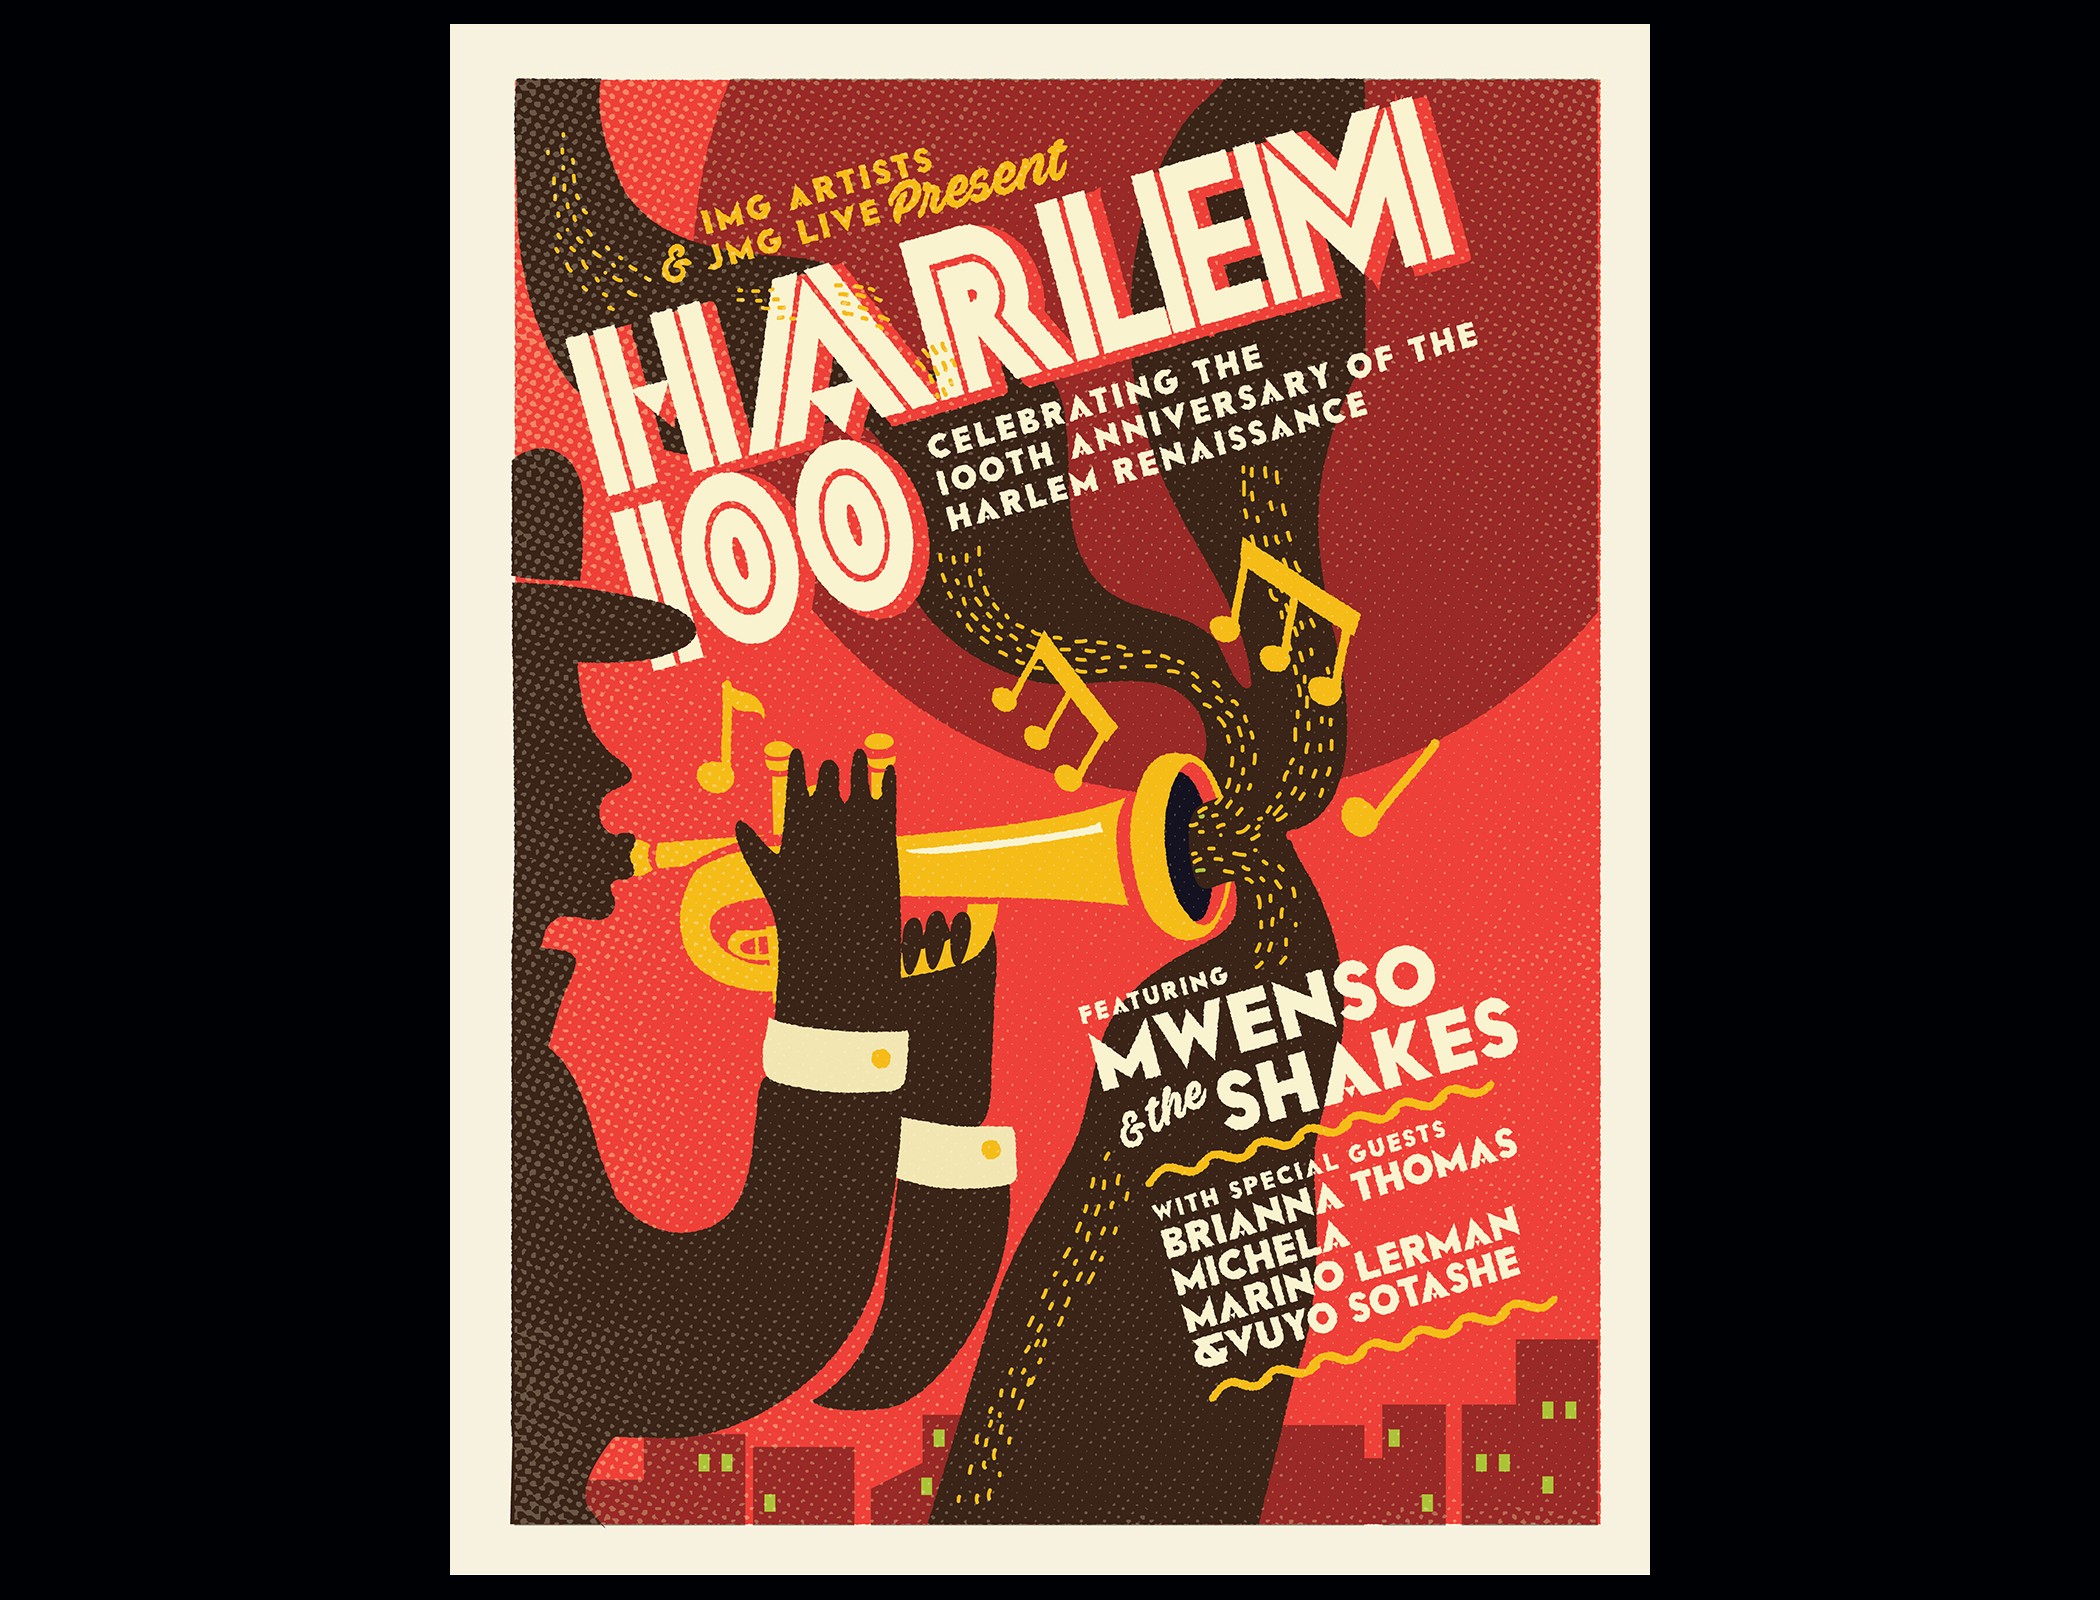 Harlem 100 Featuring Mwenso & The Shakes | Mayo Performing Arts Center